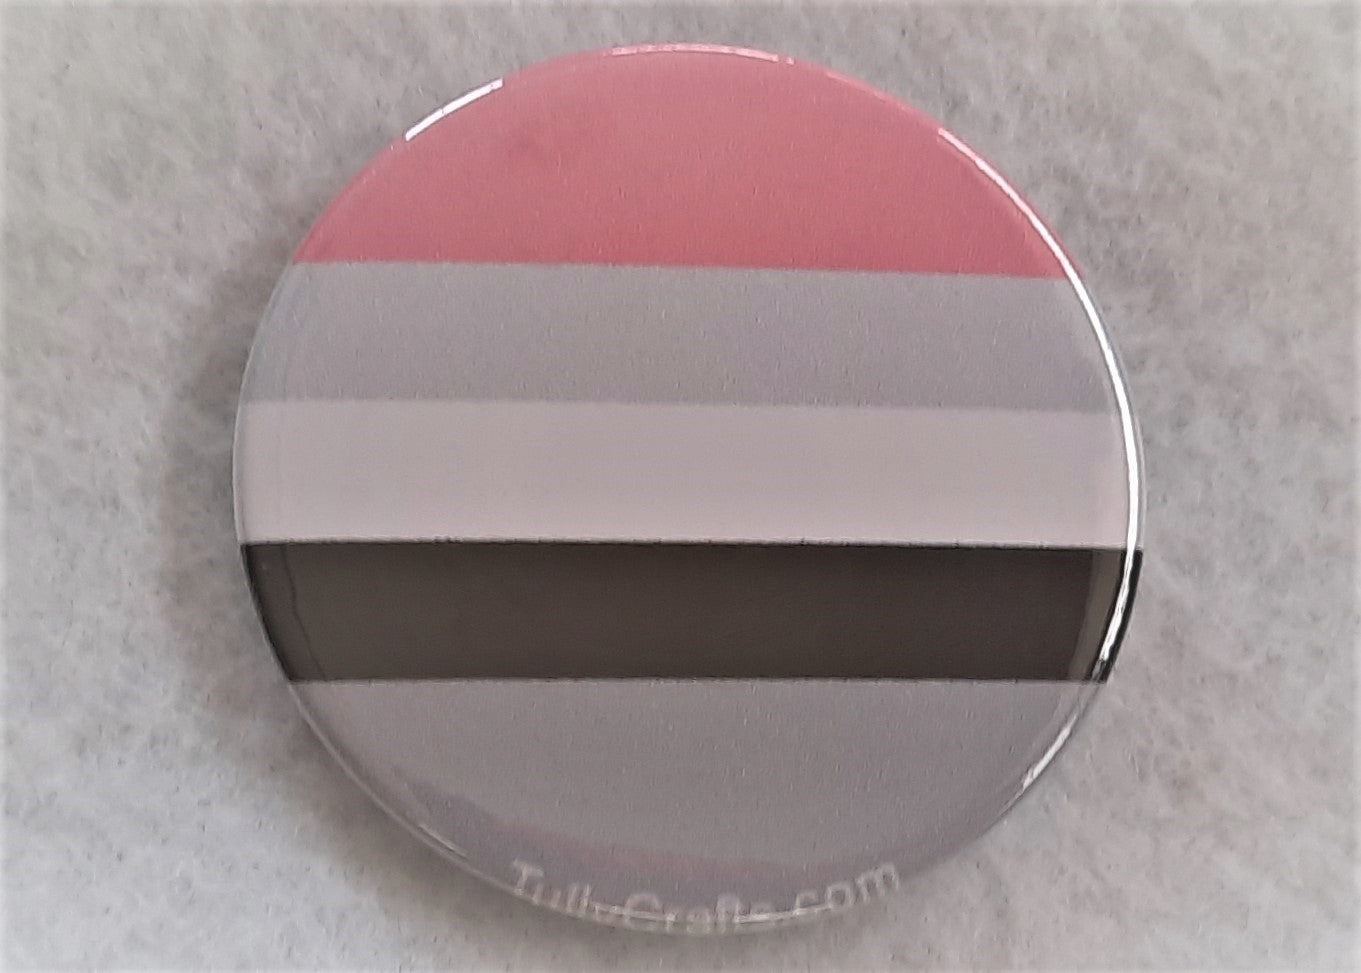 Apressexual Pride Flag Badge - Tully Crafts